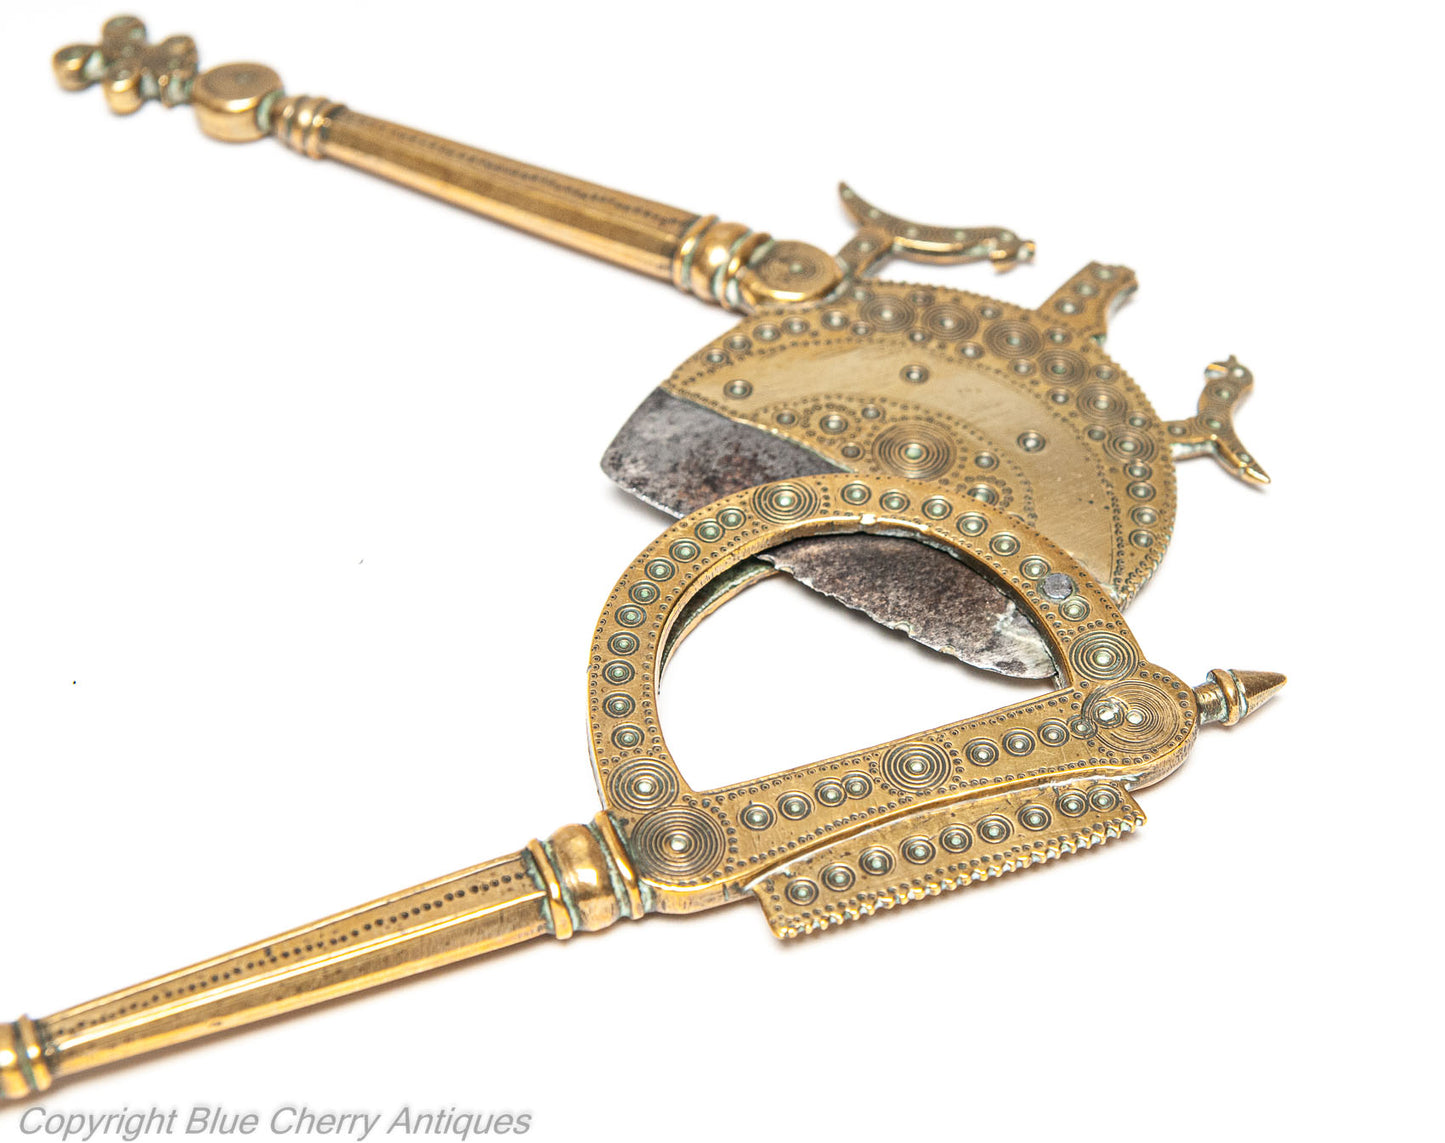 Rare Antique Indian Brass Betel Nut Cutter with Bird Decoration - Deccan Region (Code 1858)